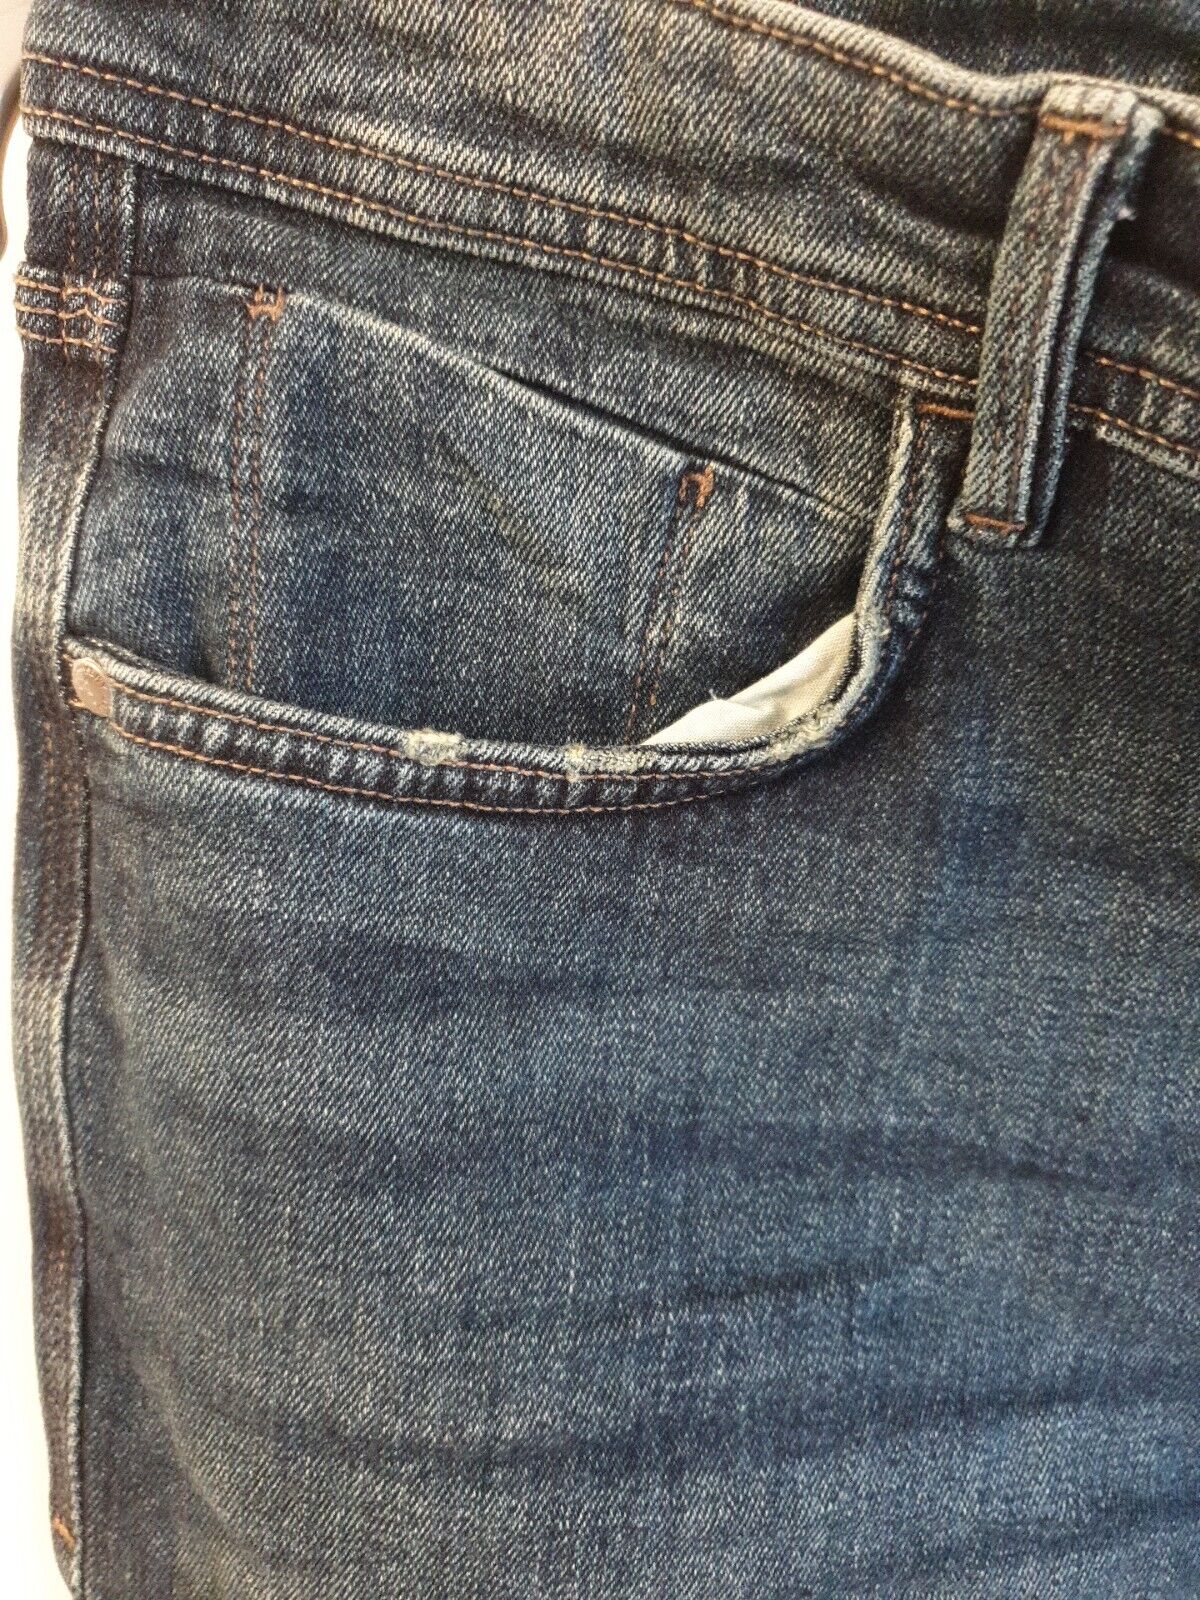 Mens Jeans Skinny Fit- Dark Wash. Uk 38S